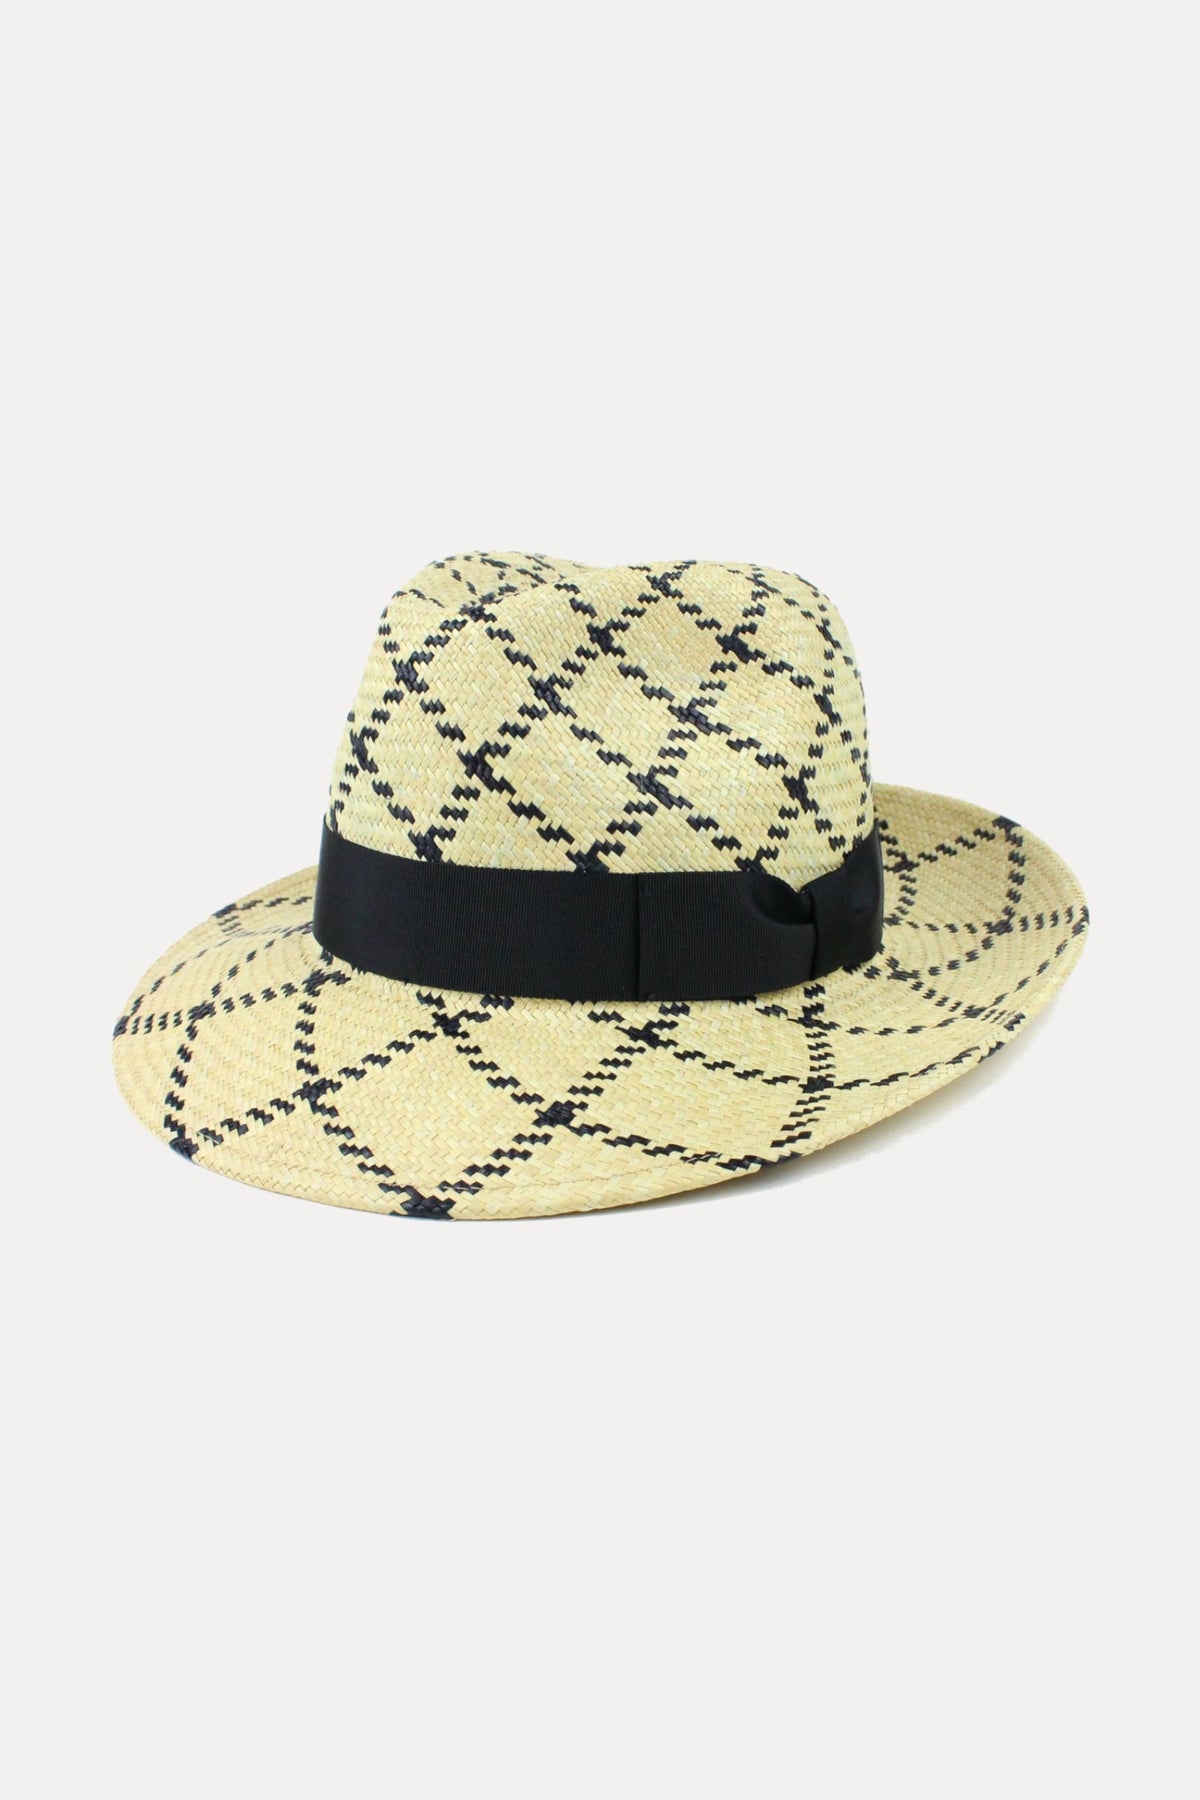 PANAMA FEDORA - CLASSIC TWIST-hats-A Child Of The Jago